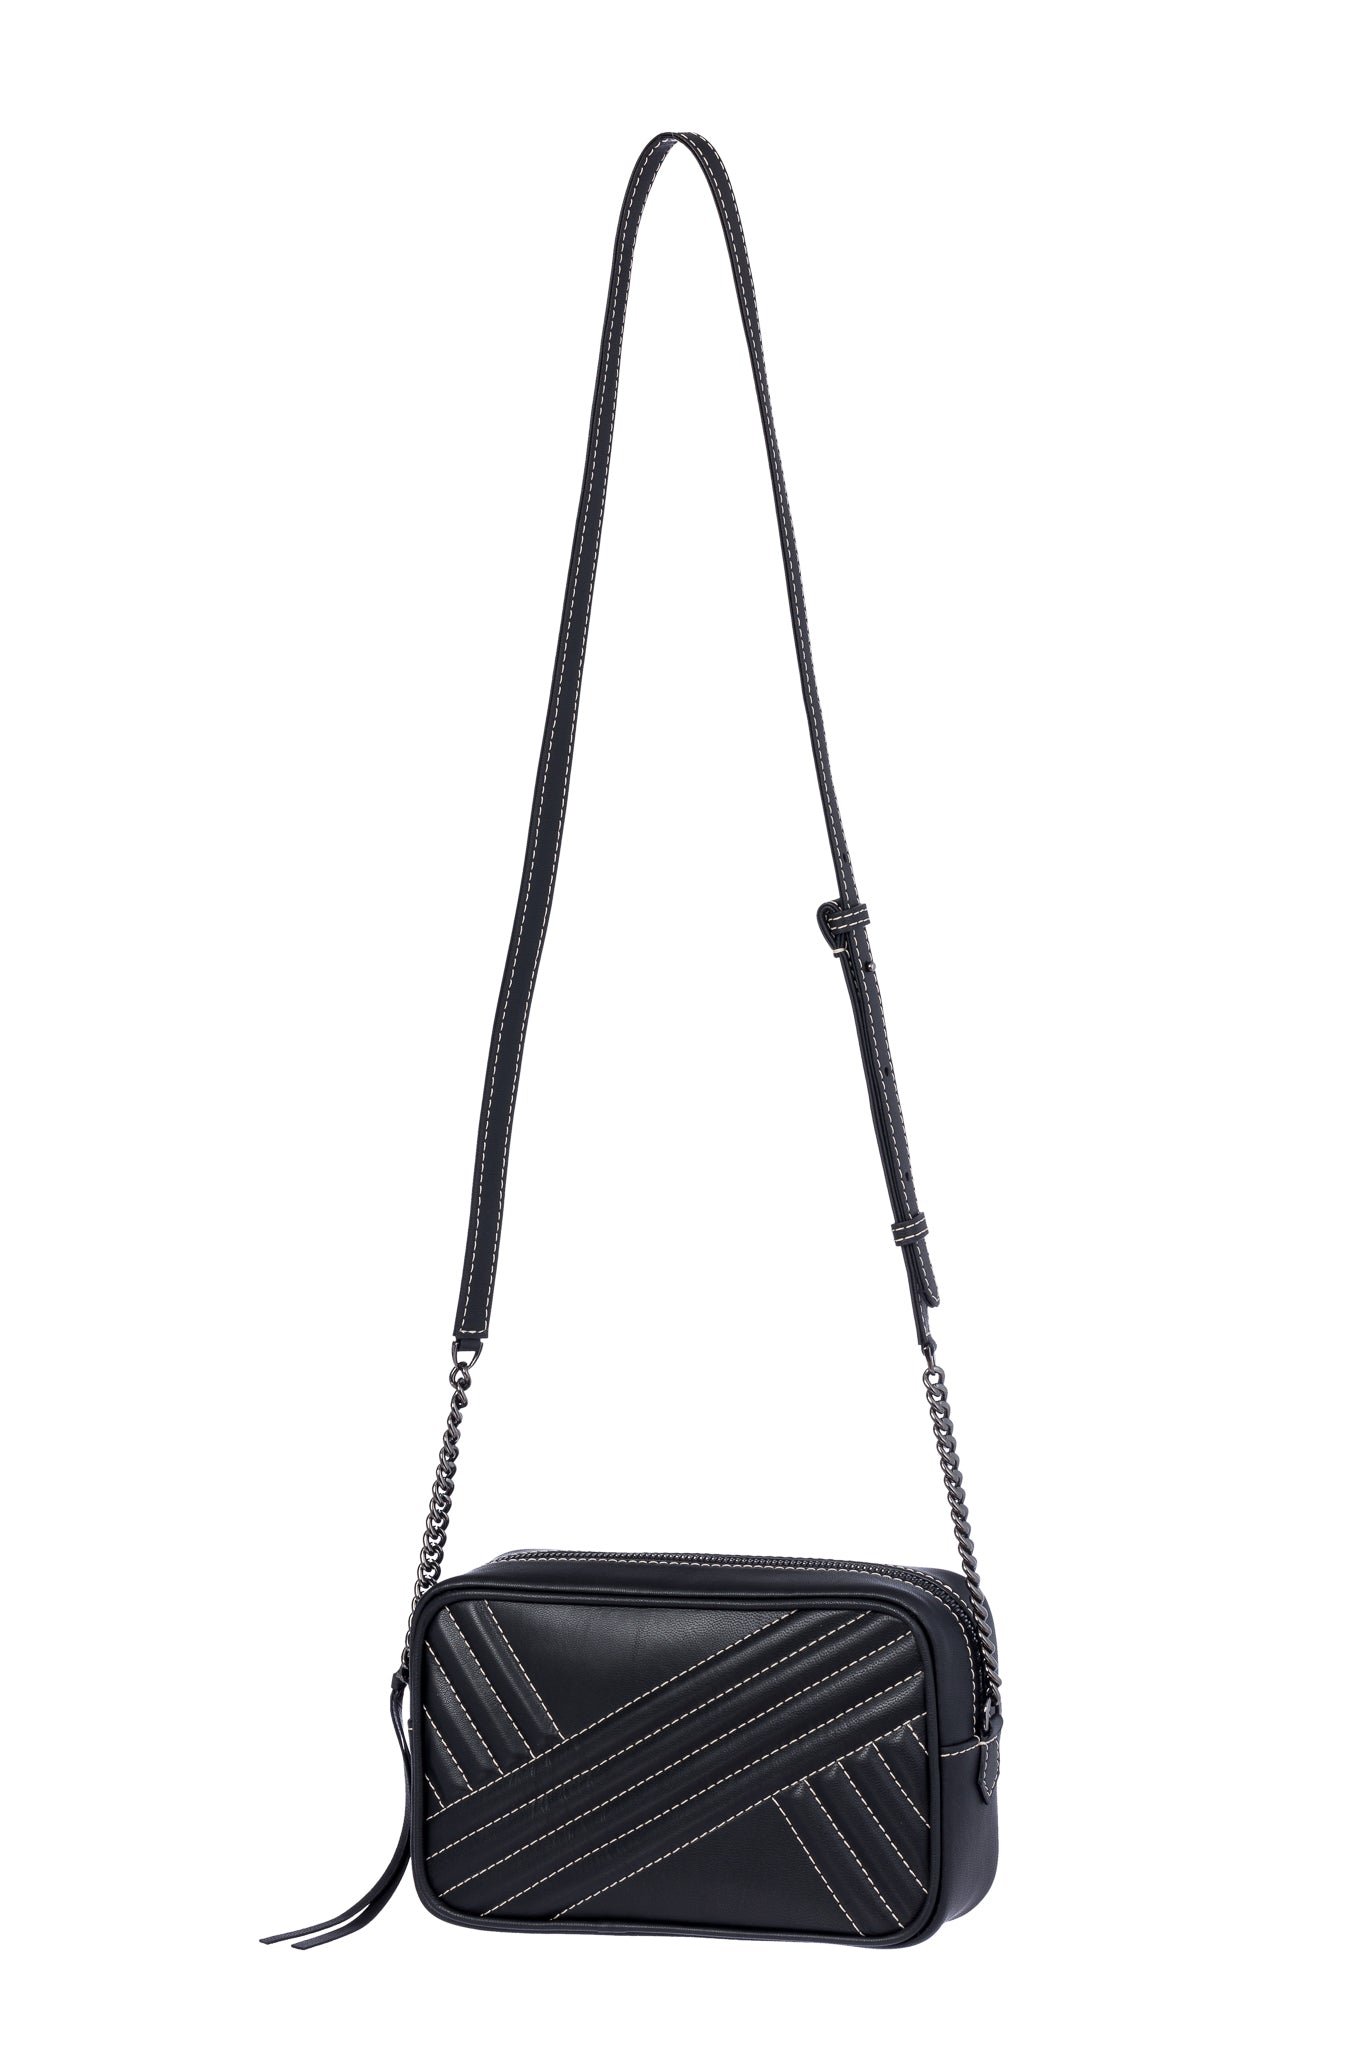 Handbag in Black Leather